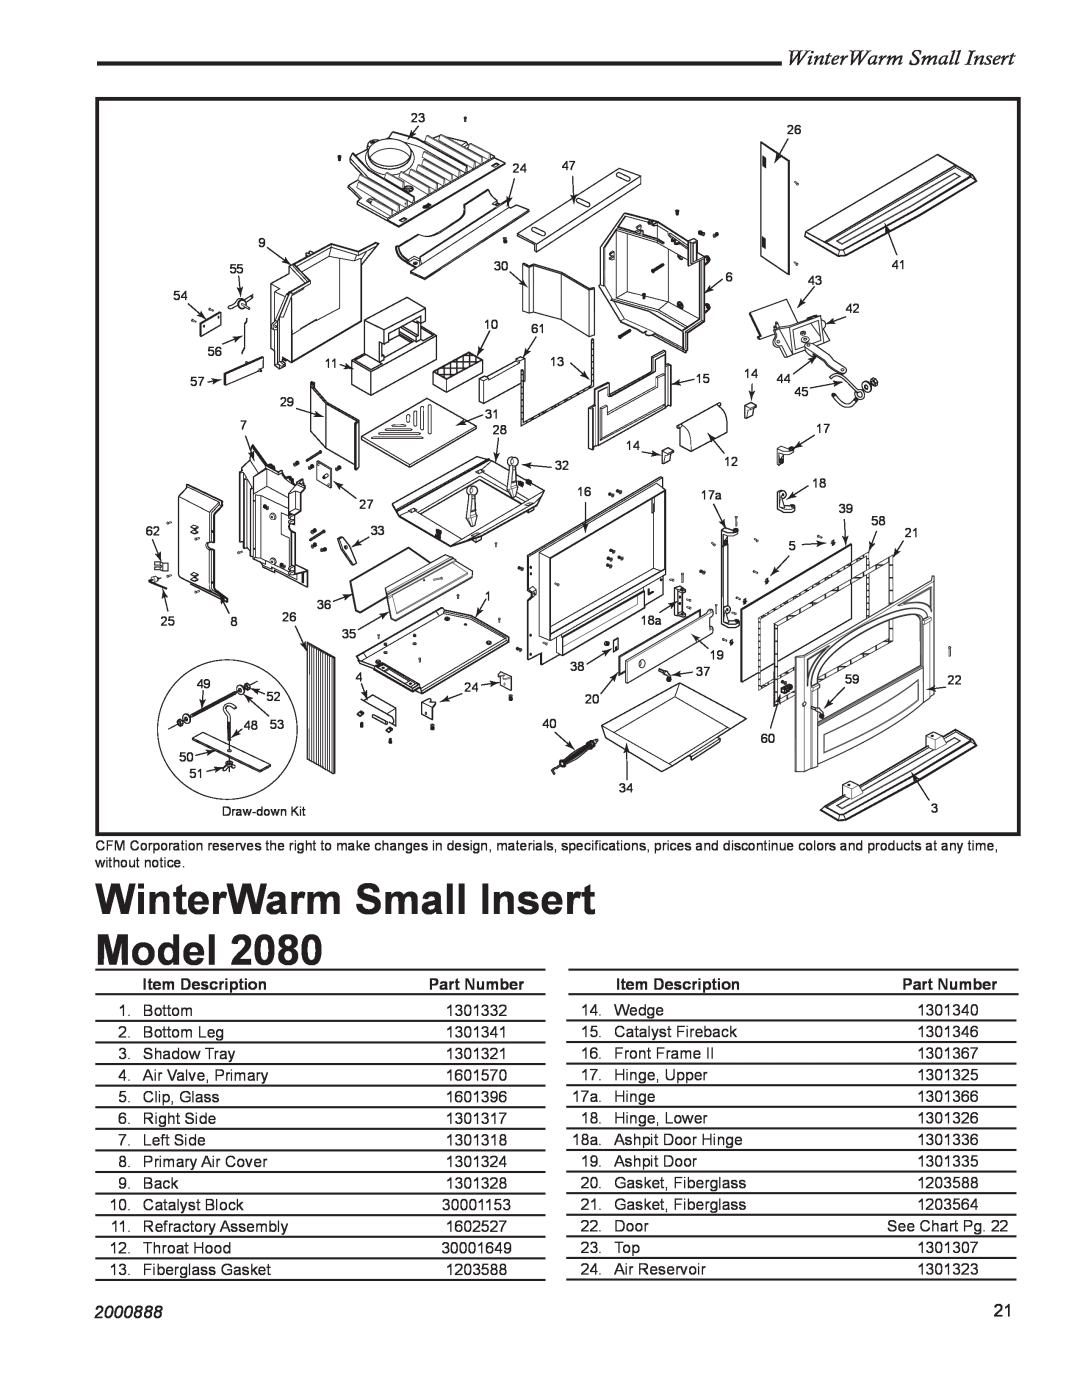 Vermont Casting 2080 installation instructions WinterWarm Small Insert Model, 2000888, Item Description, Part Number 